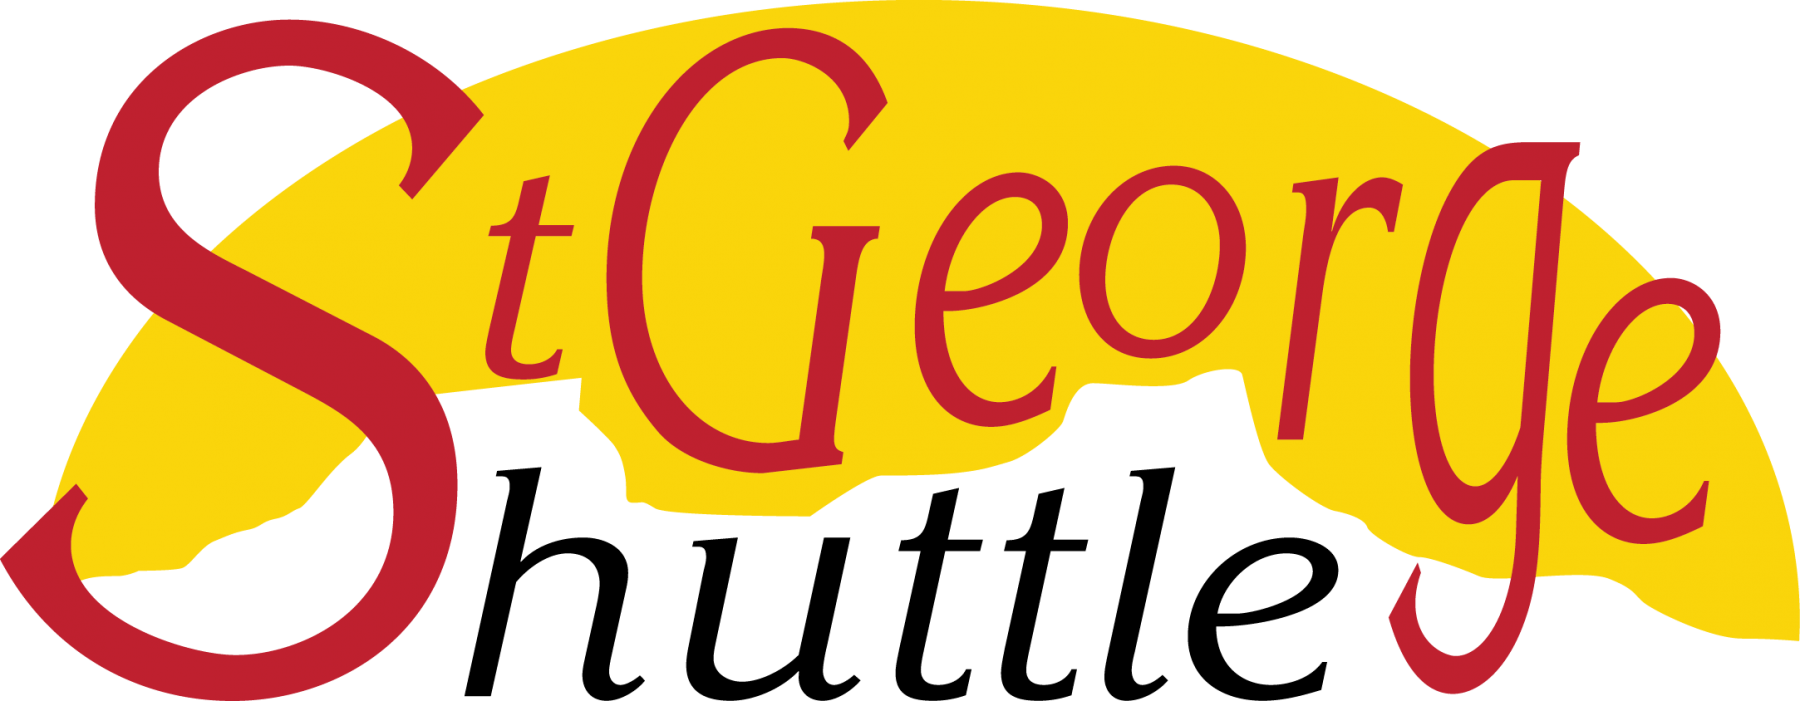 Shuttle Logo - St. George Shuttle Accommodates Travel In Zion | ZionNationalPark.com